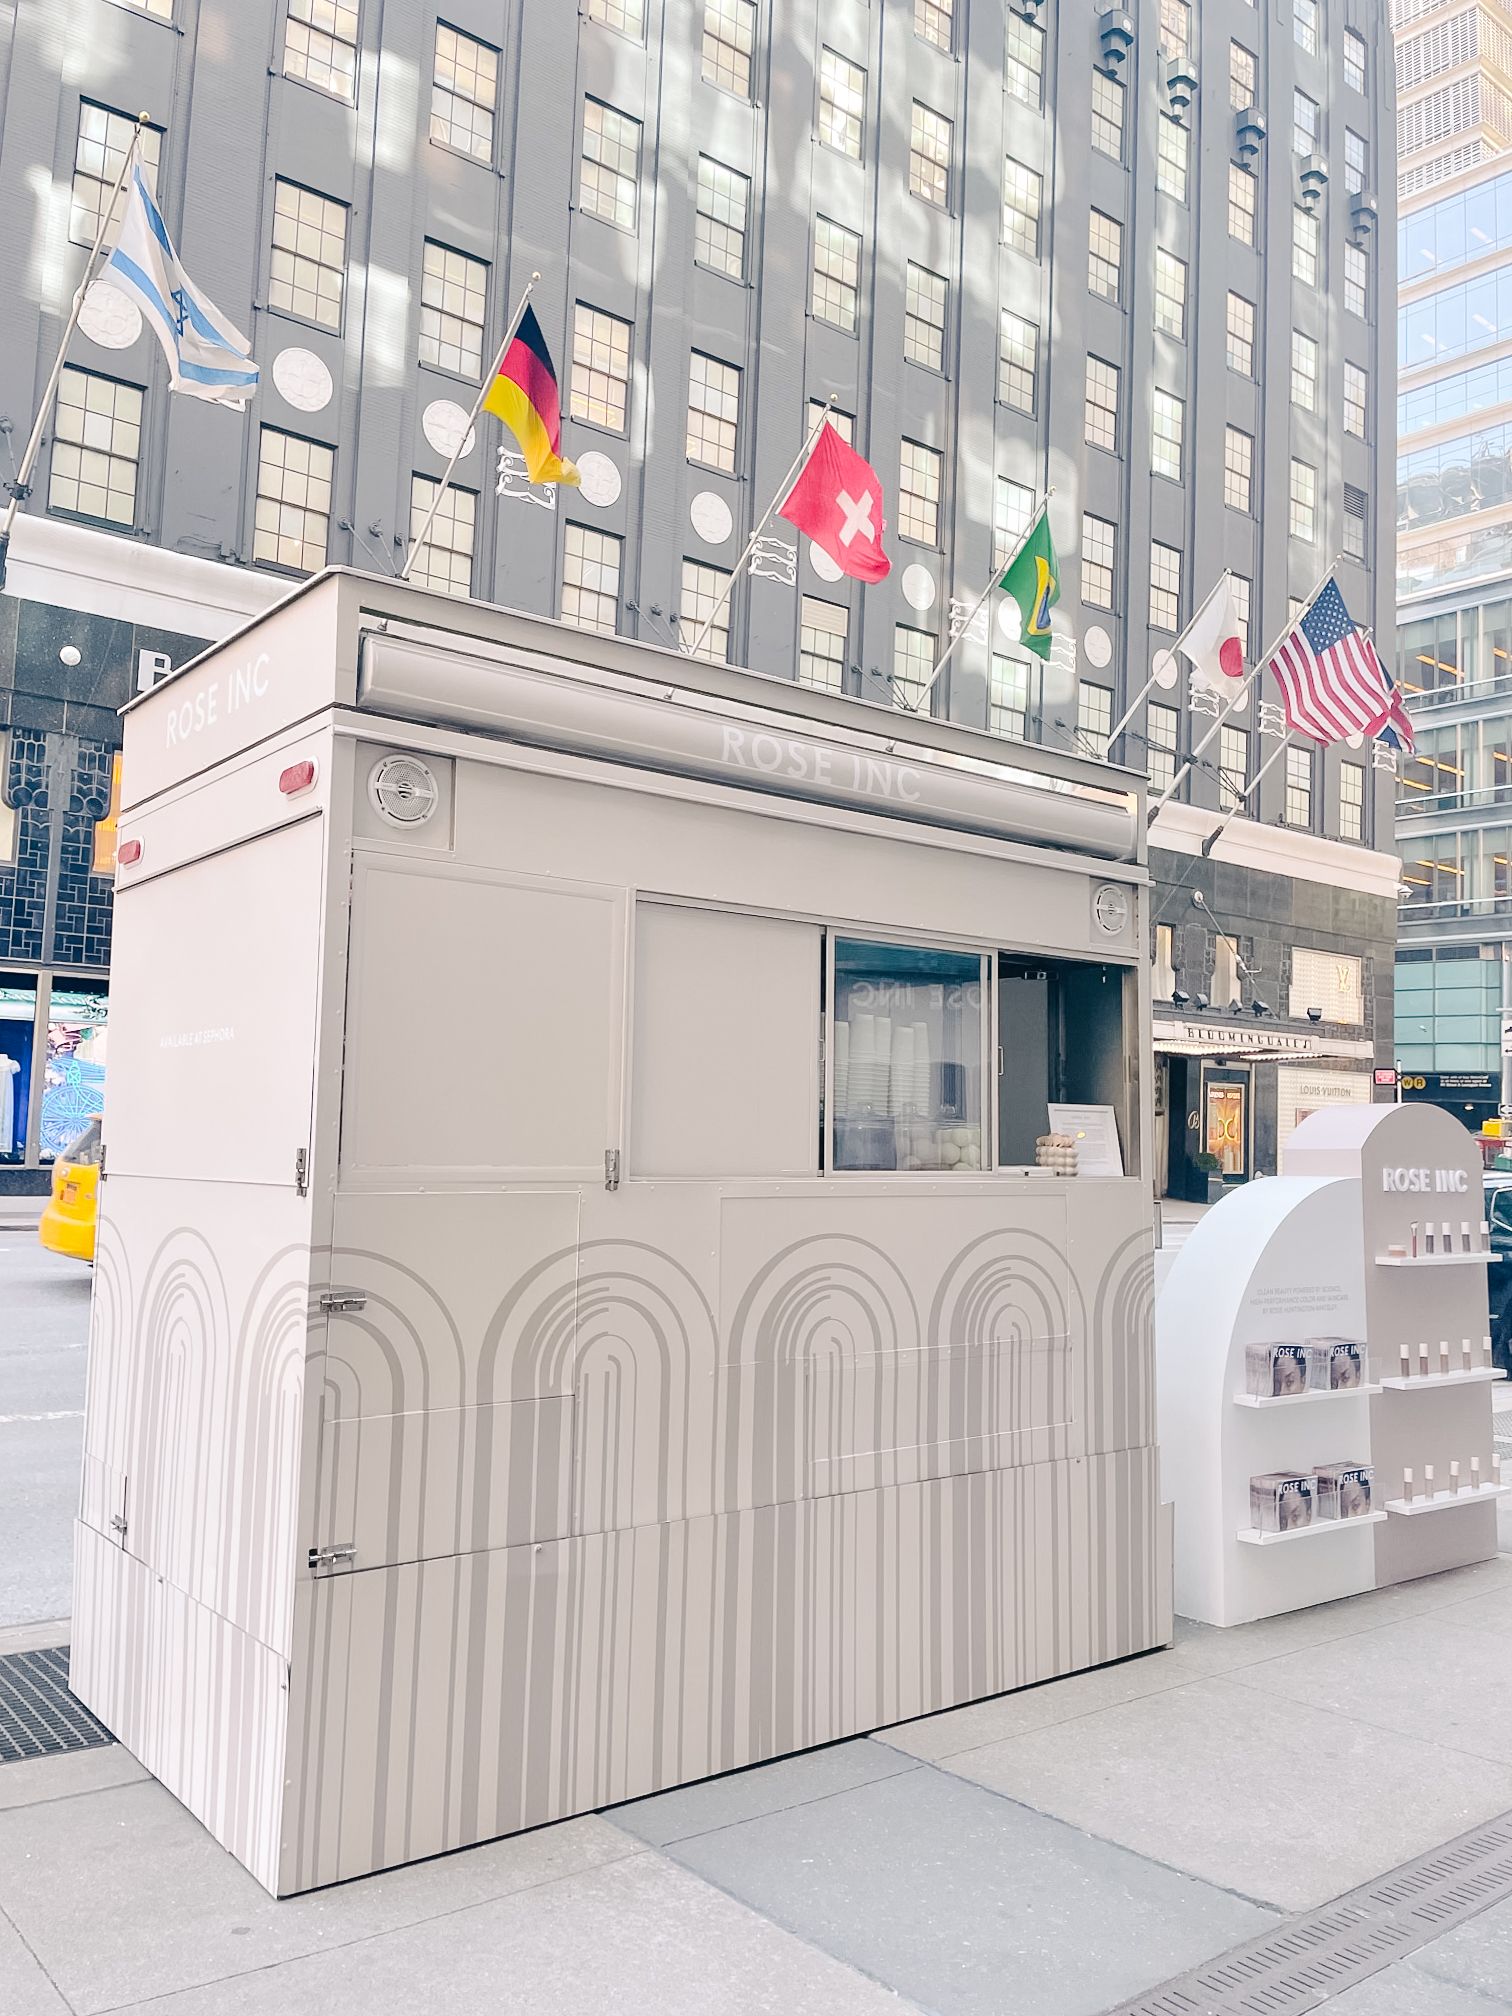 Rose Inc Branded Food Cart In New York City